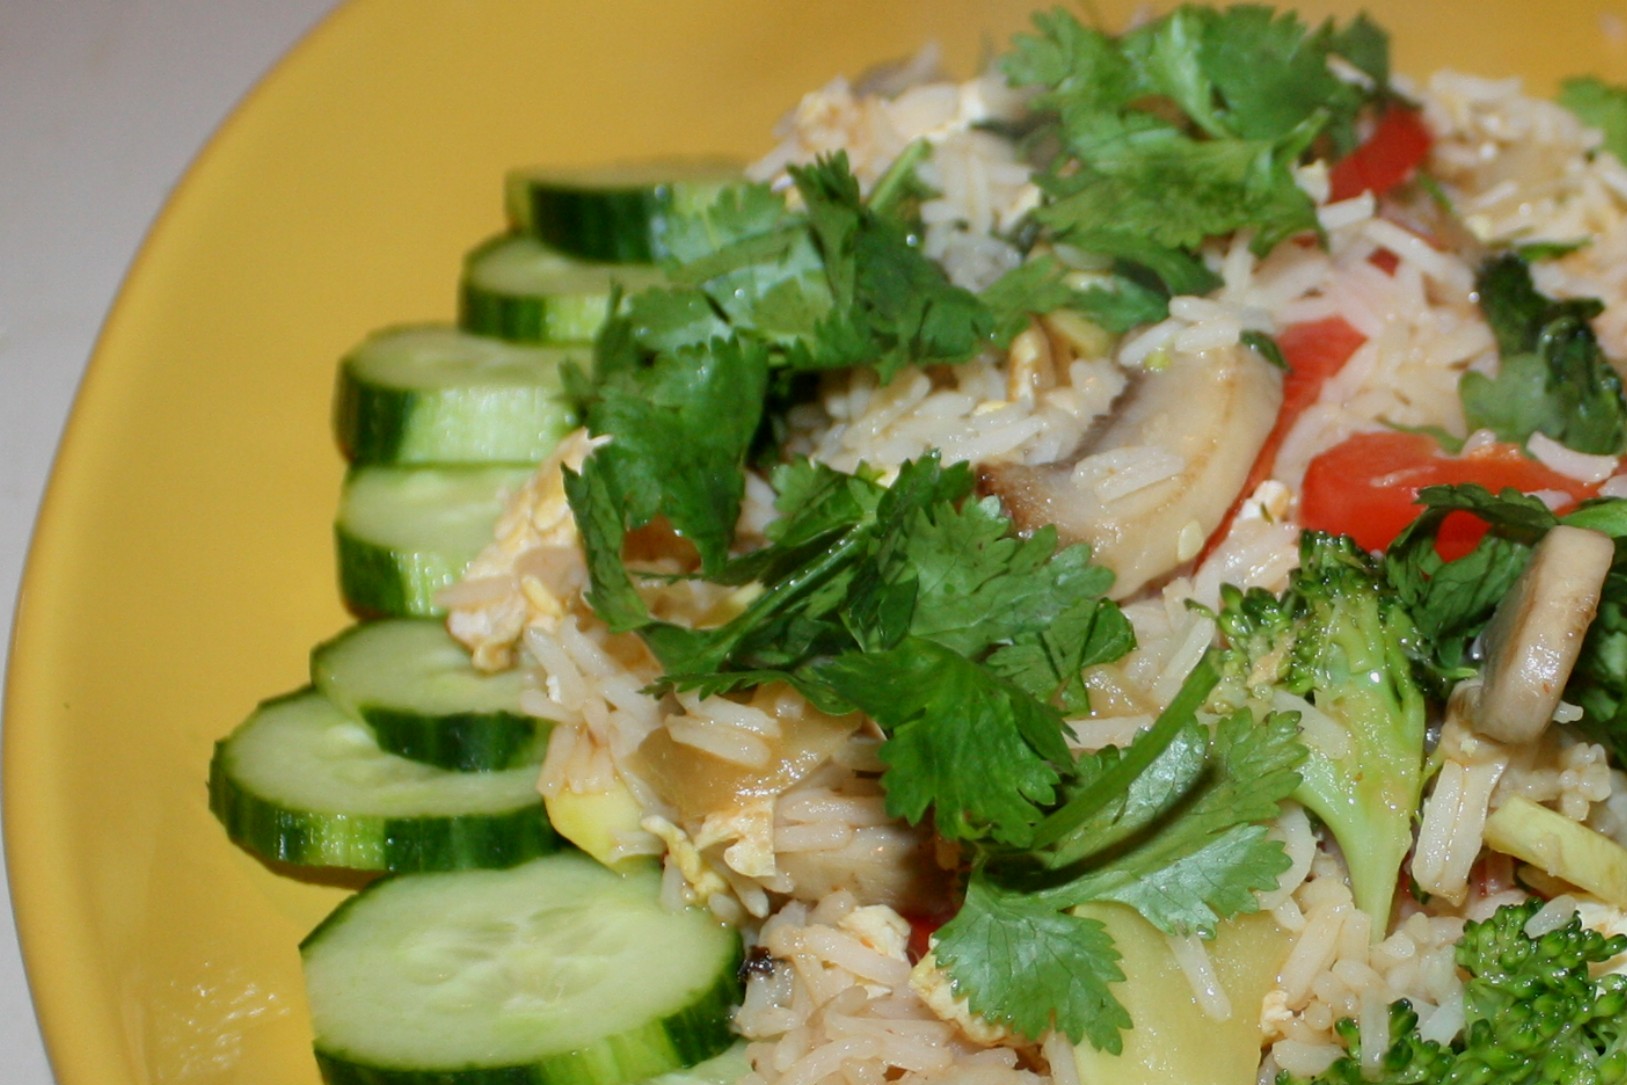 KHAO PAD PAK (Thai Stir-fried Rice & Vegetables)